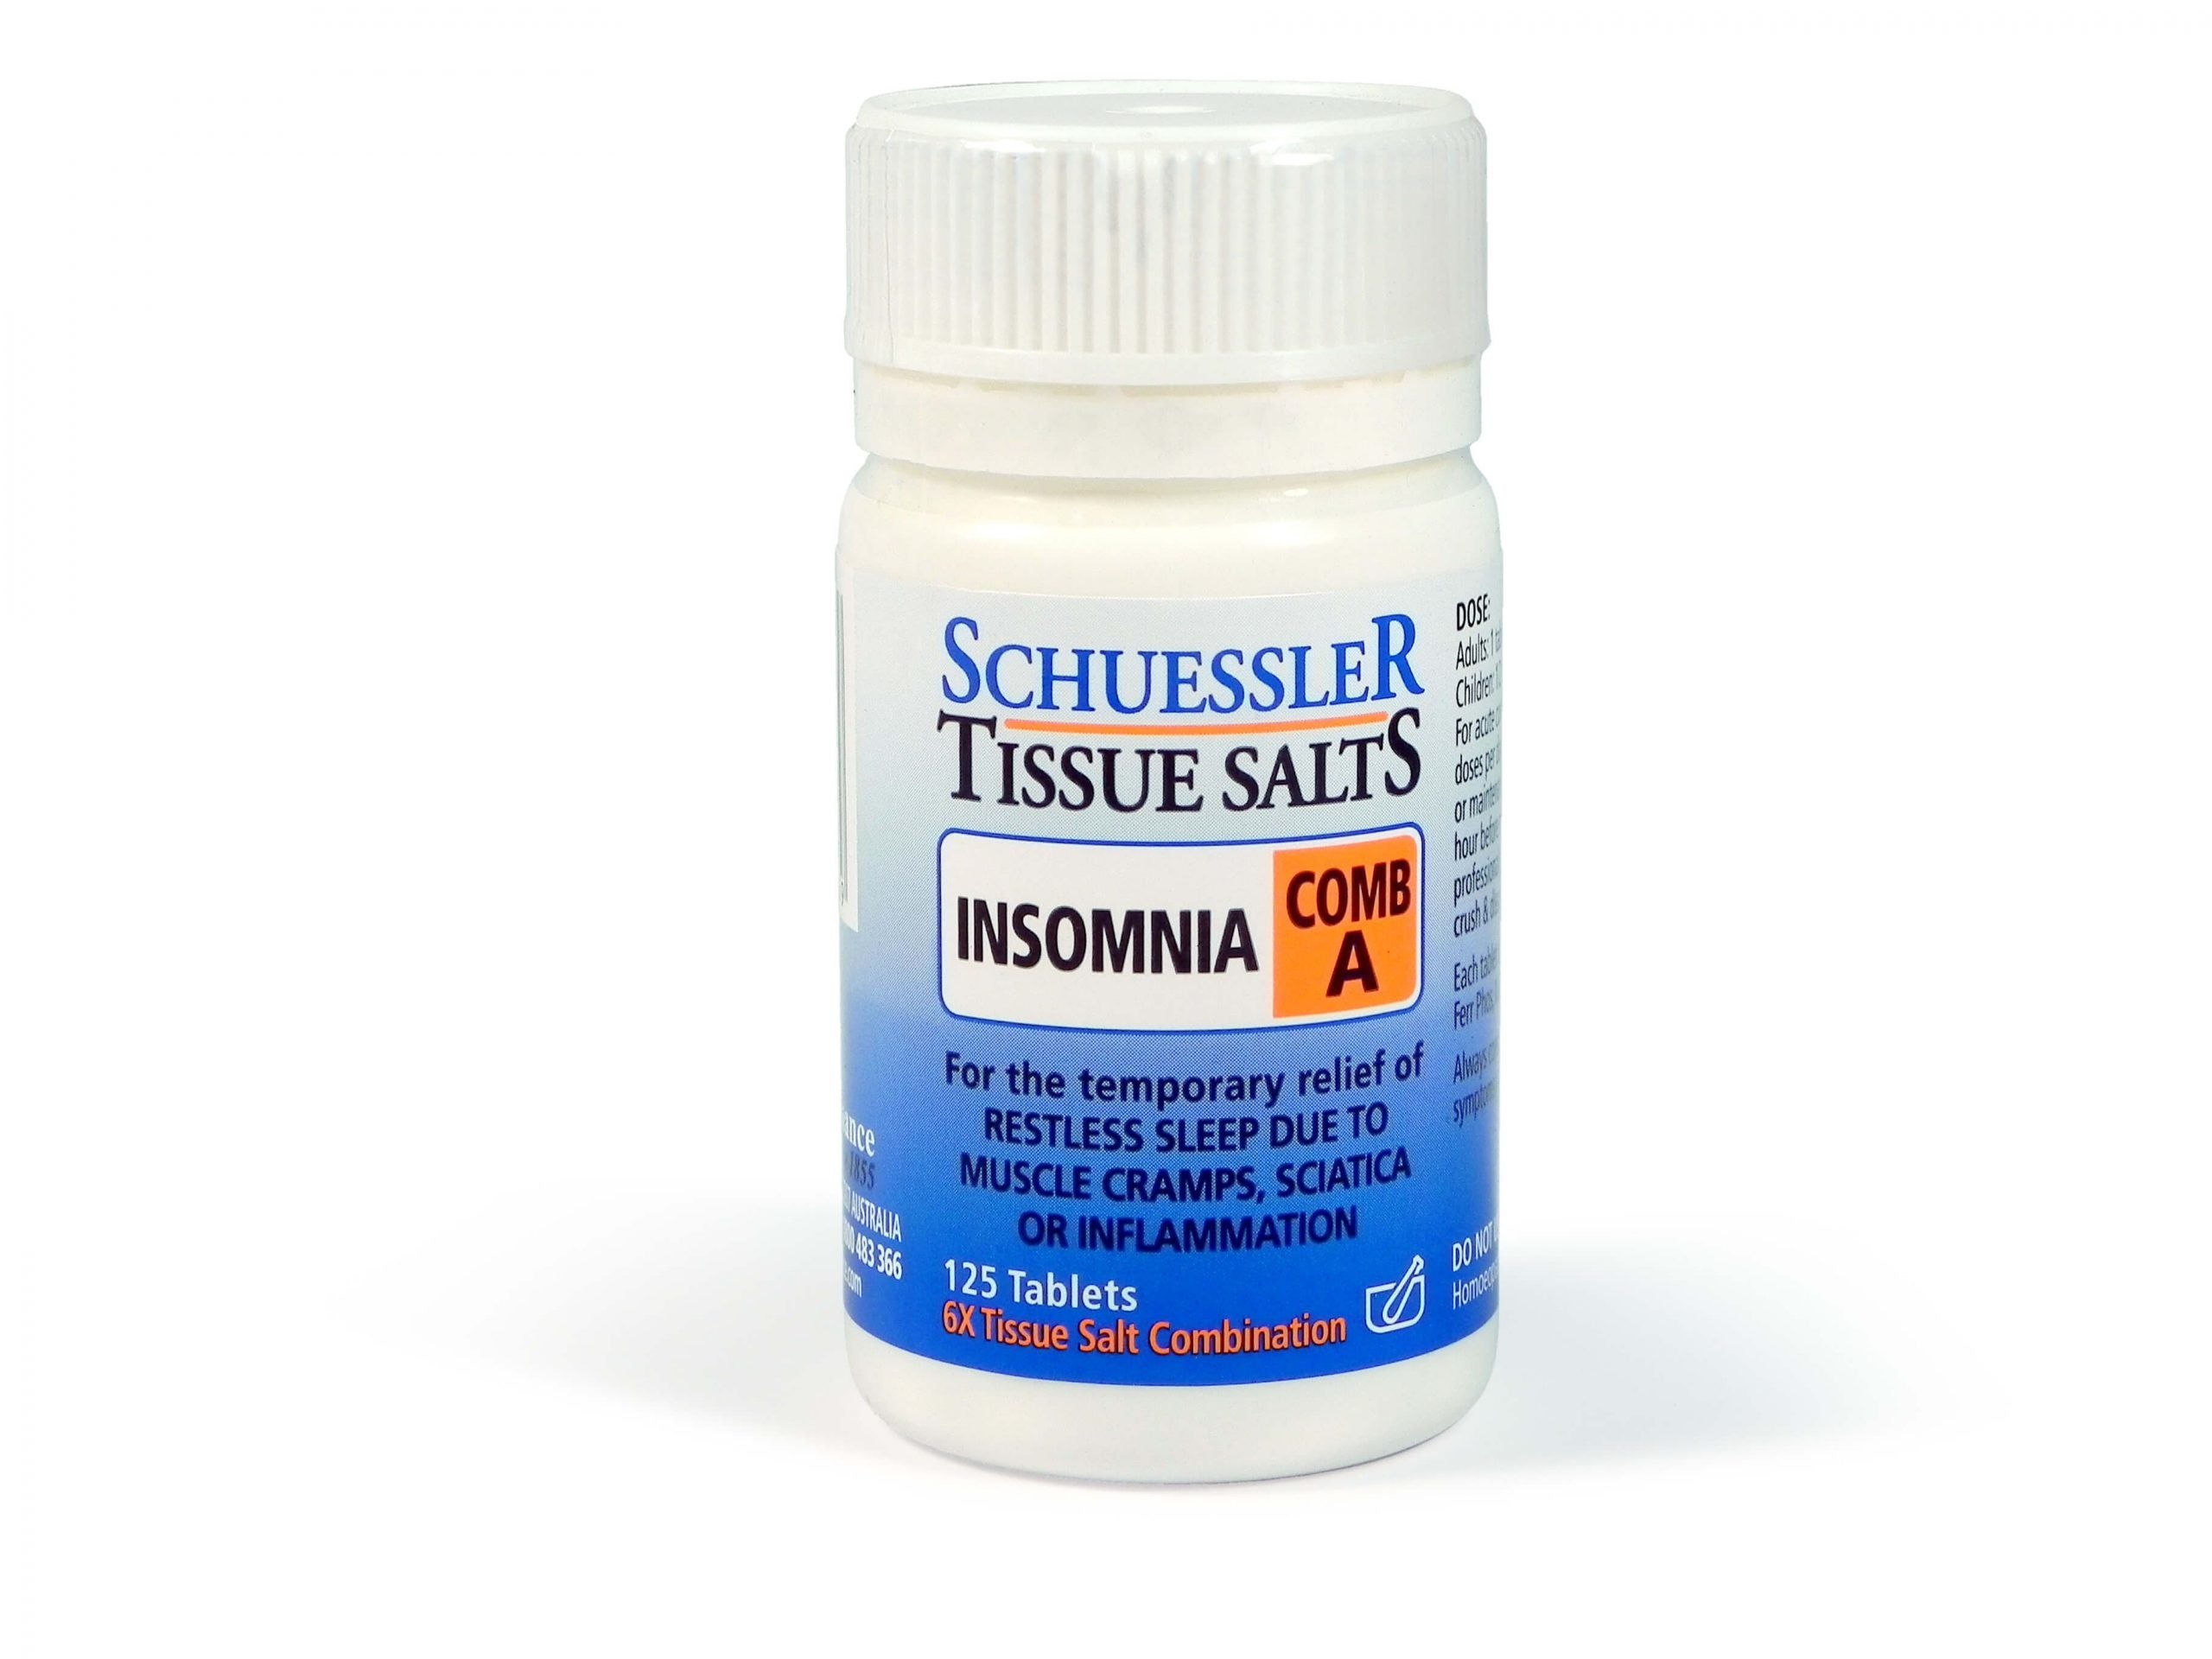 M&P Schuessler Tissue Salts Combination A Insomnia 125 Tablets